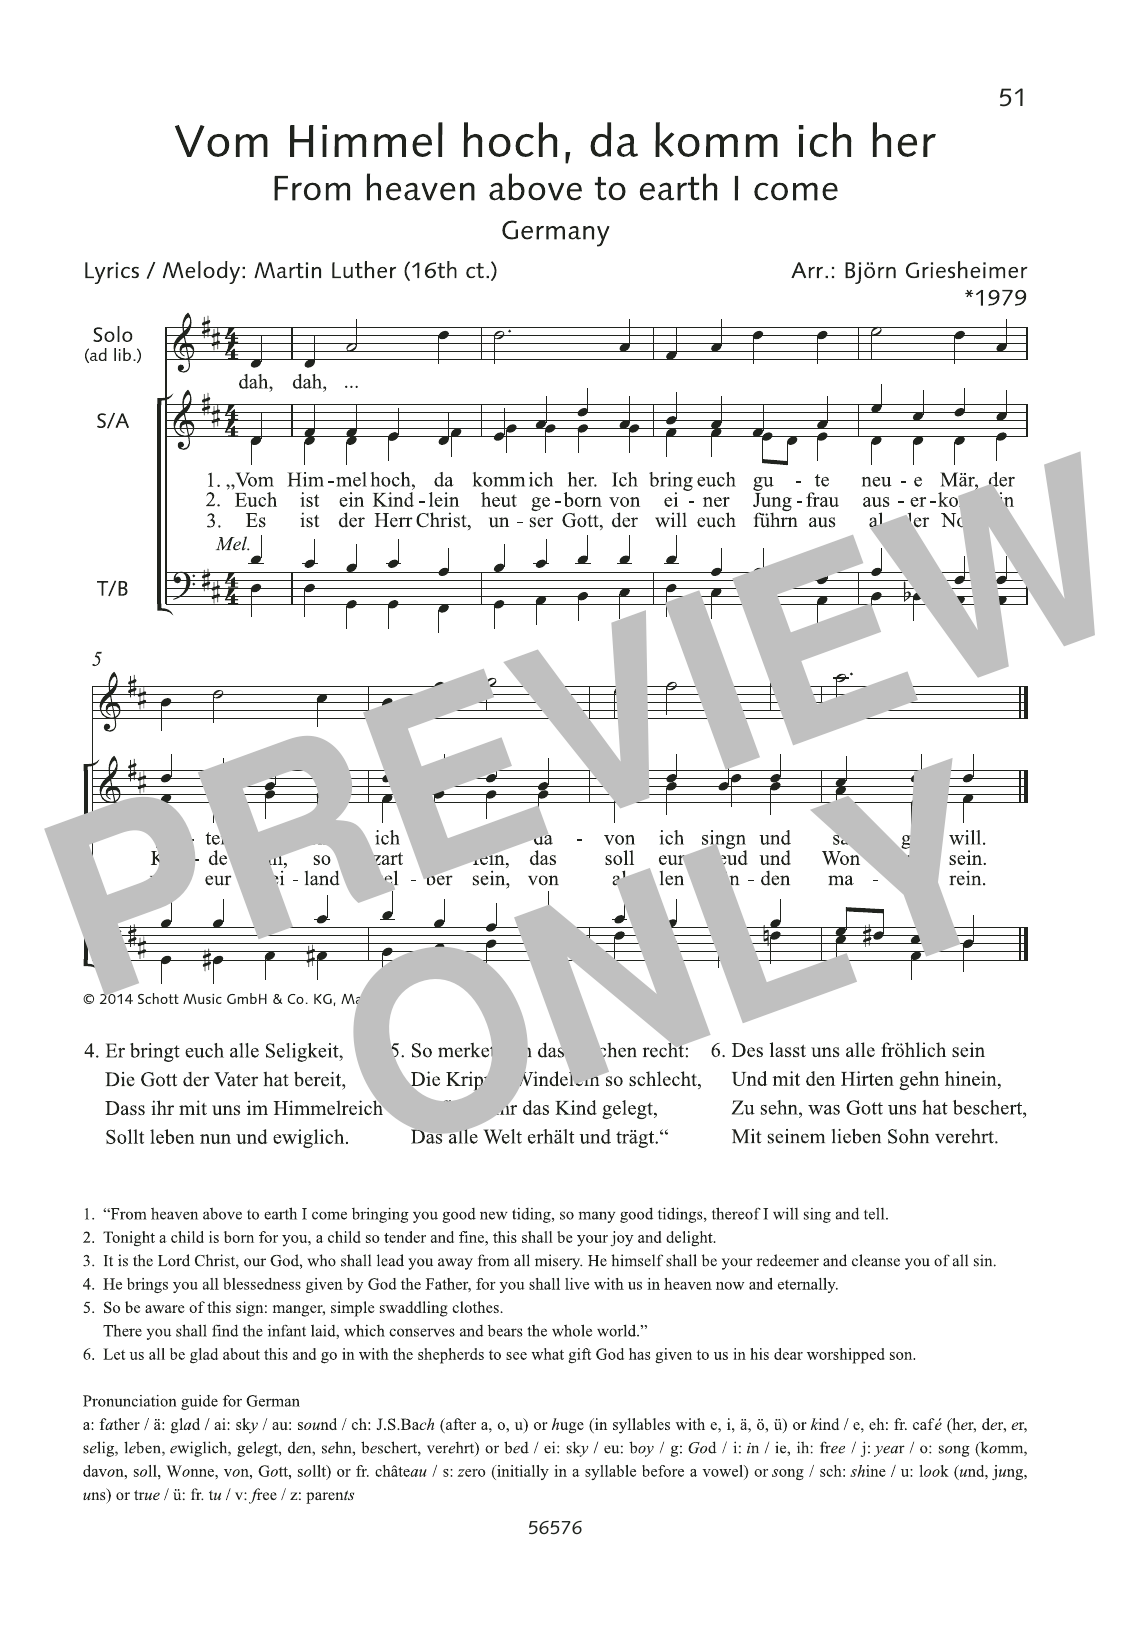 Martin Luther Vom Himmel hoch, da komm ich her sheet music notes and chords arranged for SATB Choir